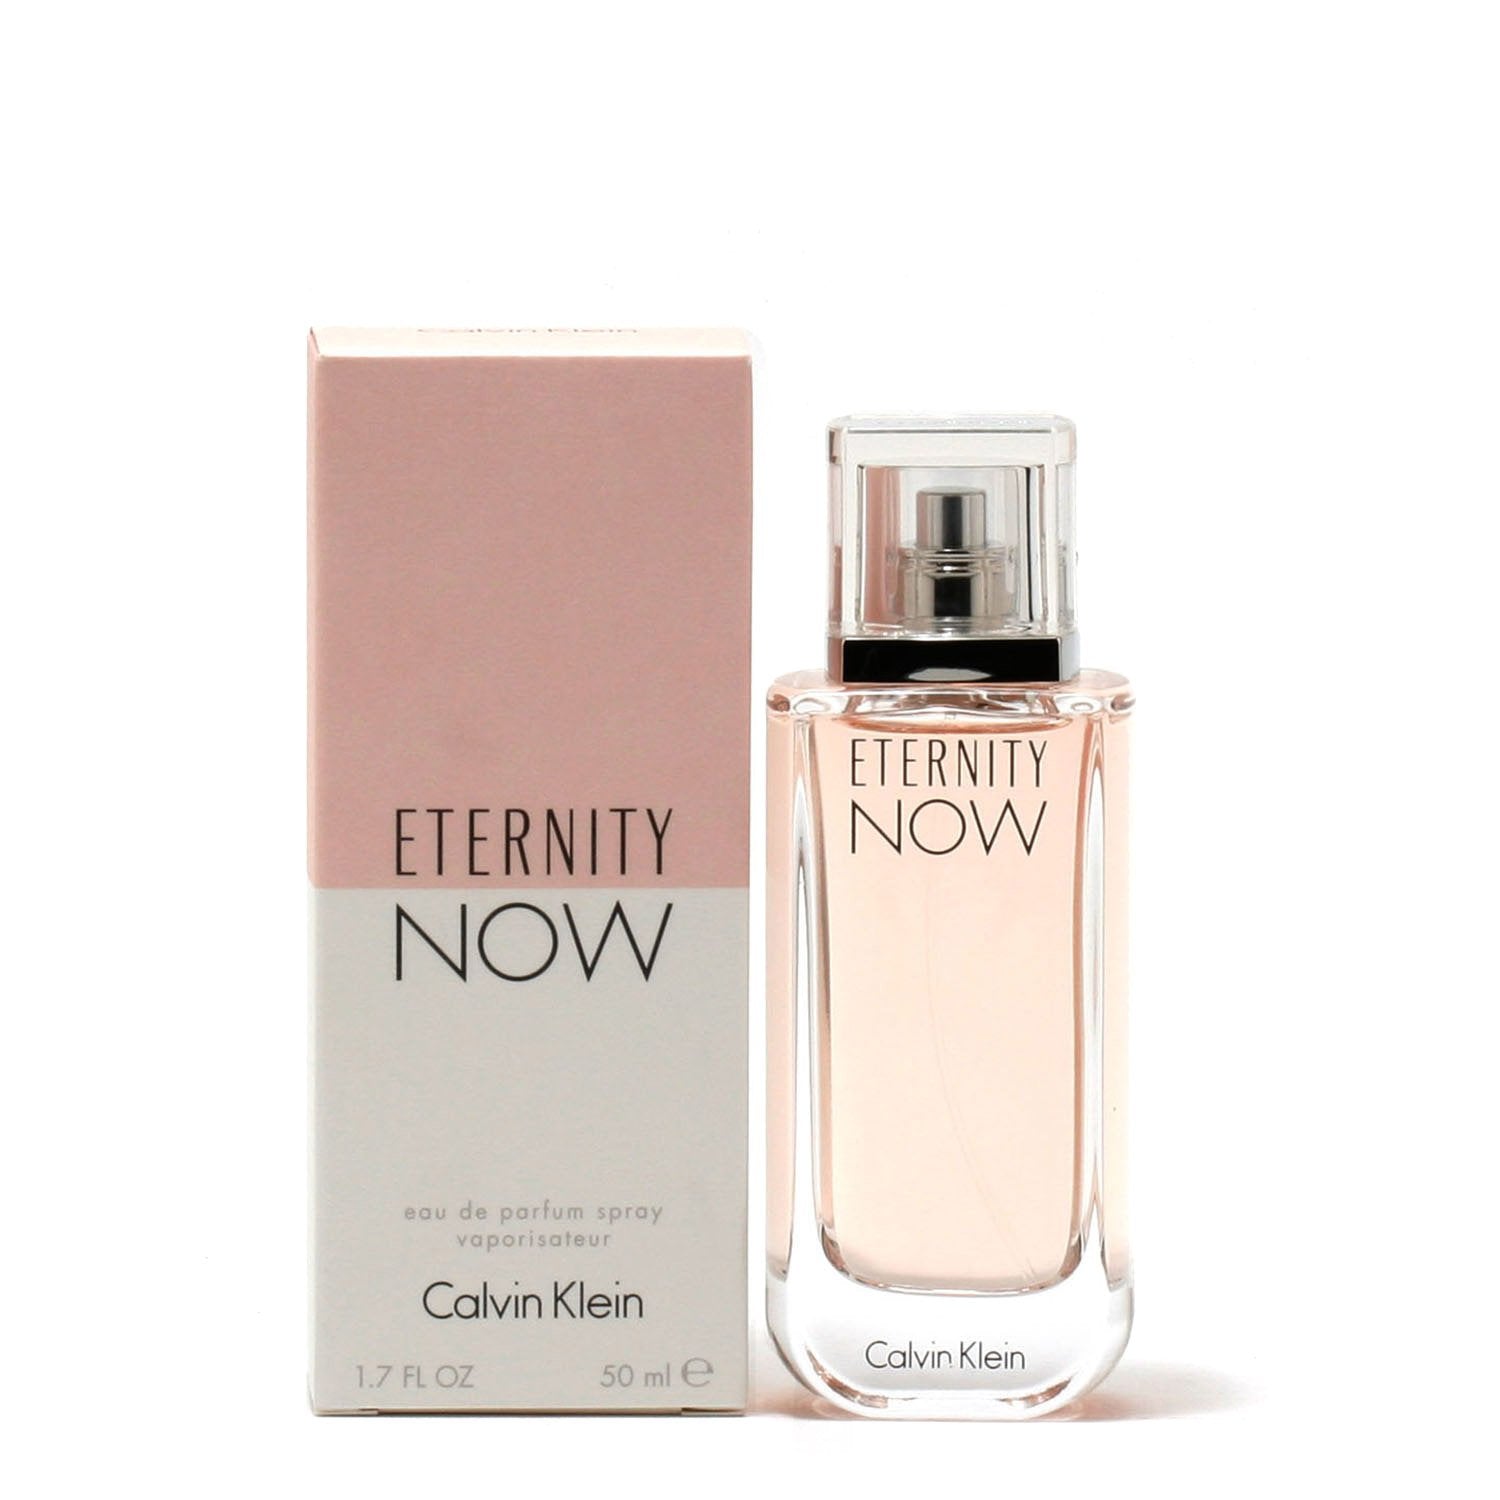 Perfume - ETERNITY NOW FOR WOMEN BY CALVIN KLEIN - EAU DE PARFUM SPRAY, 1.7 OZ